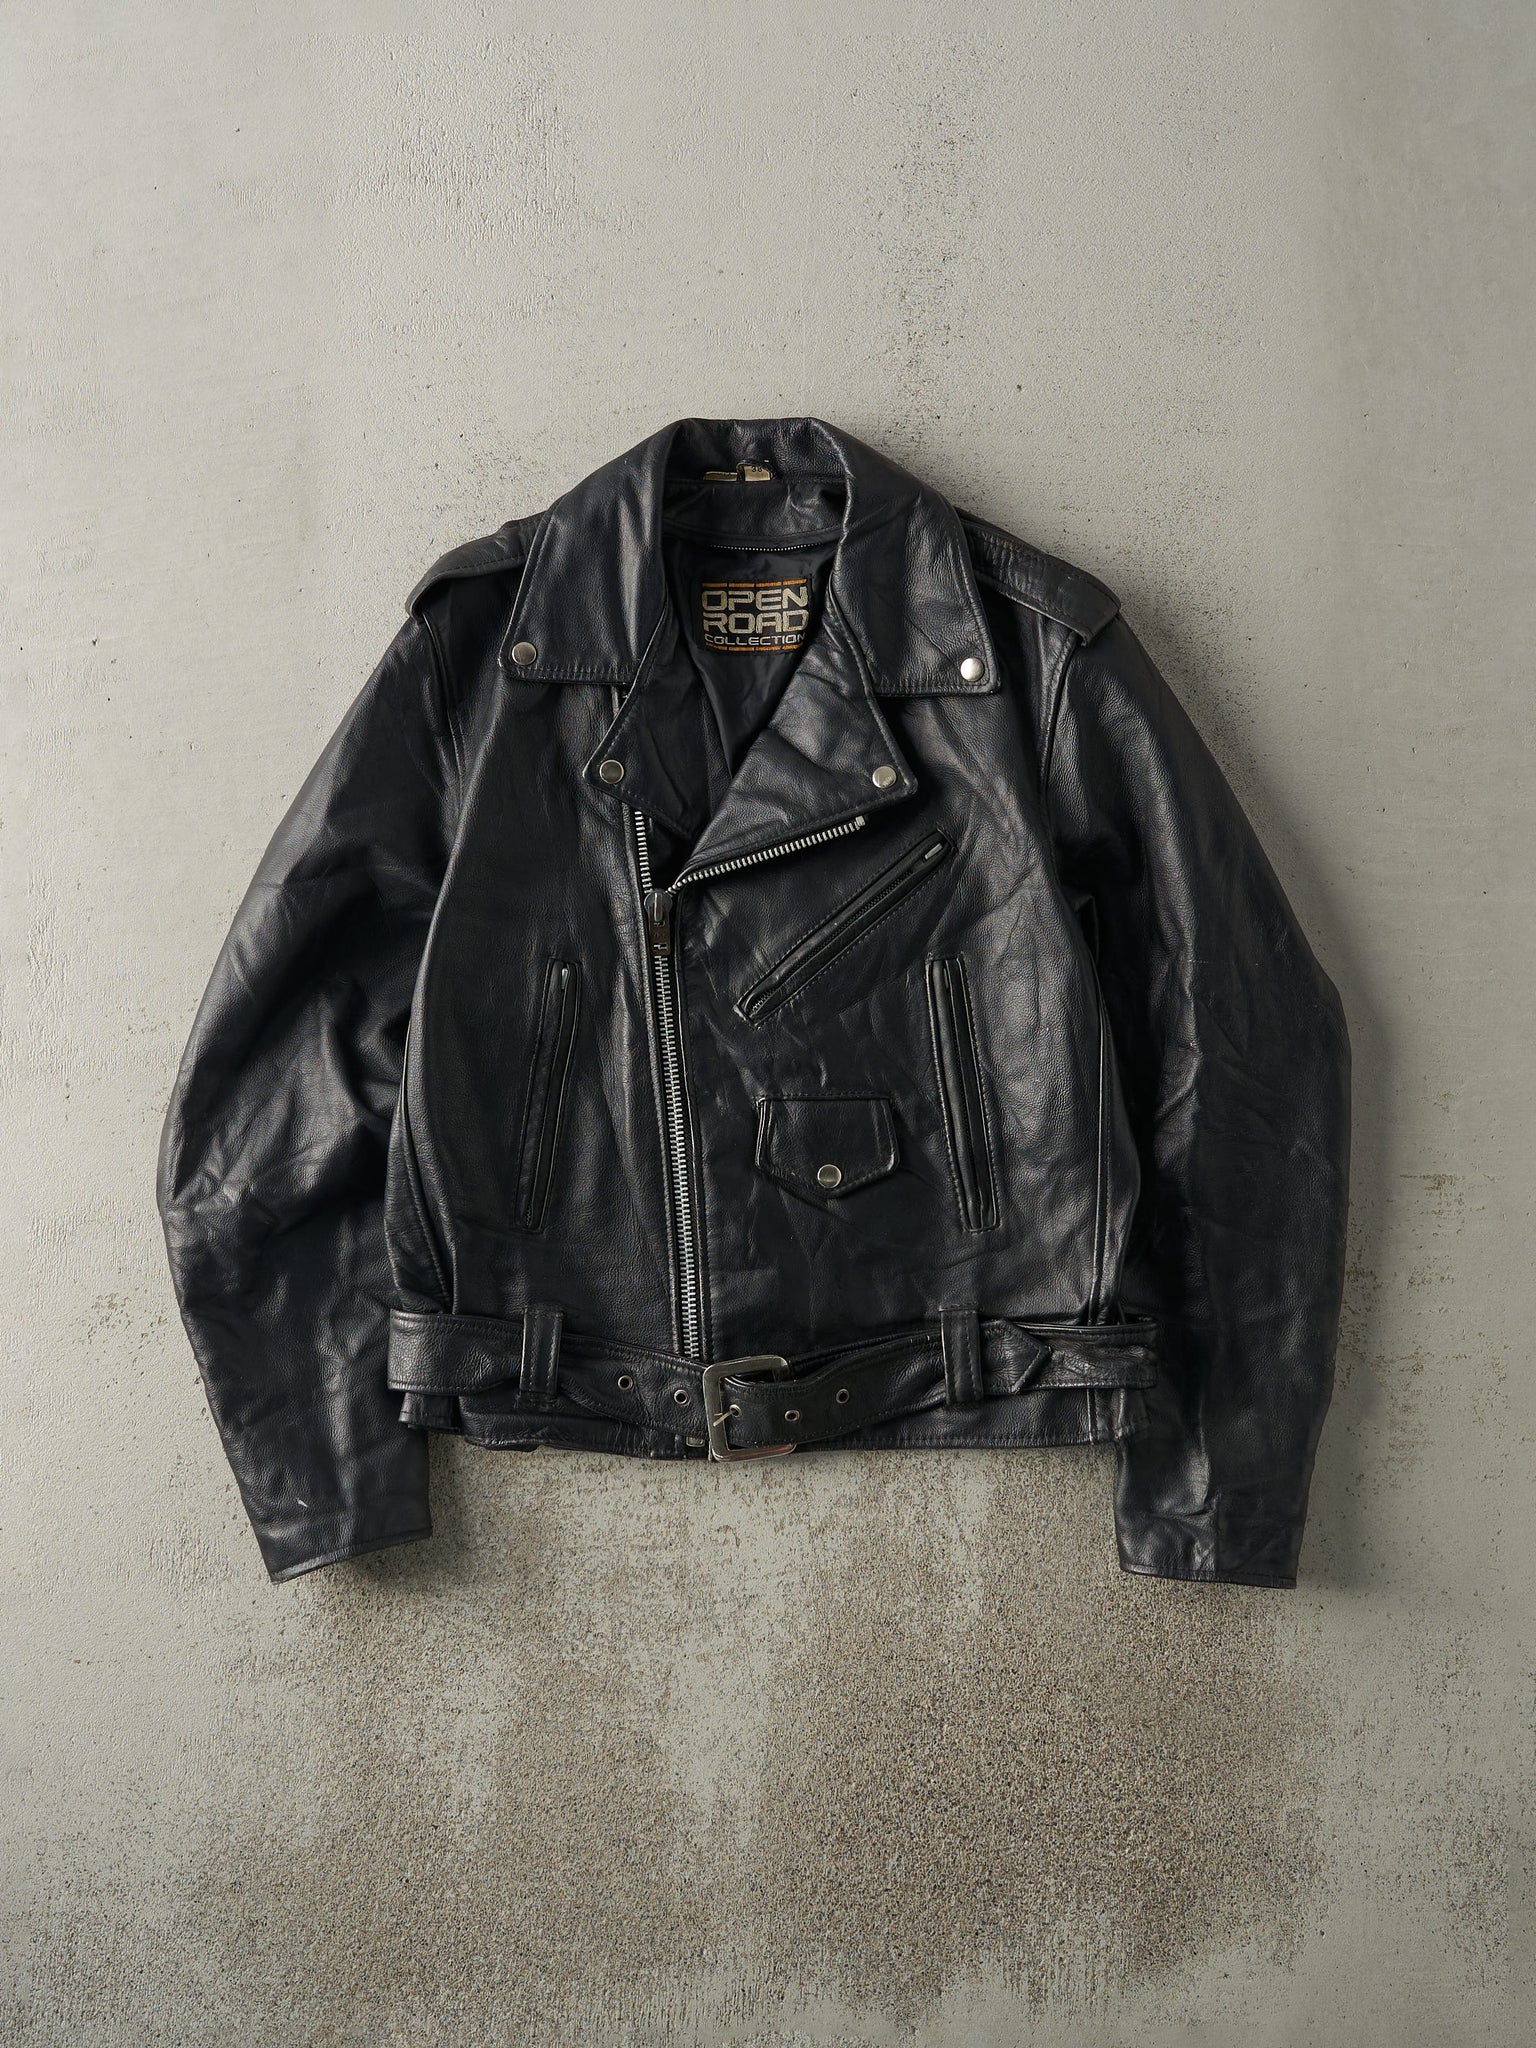 Vintage 80s Black Open Road Collection Leather Biker Jacket (S)